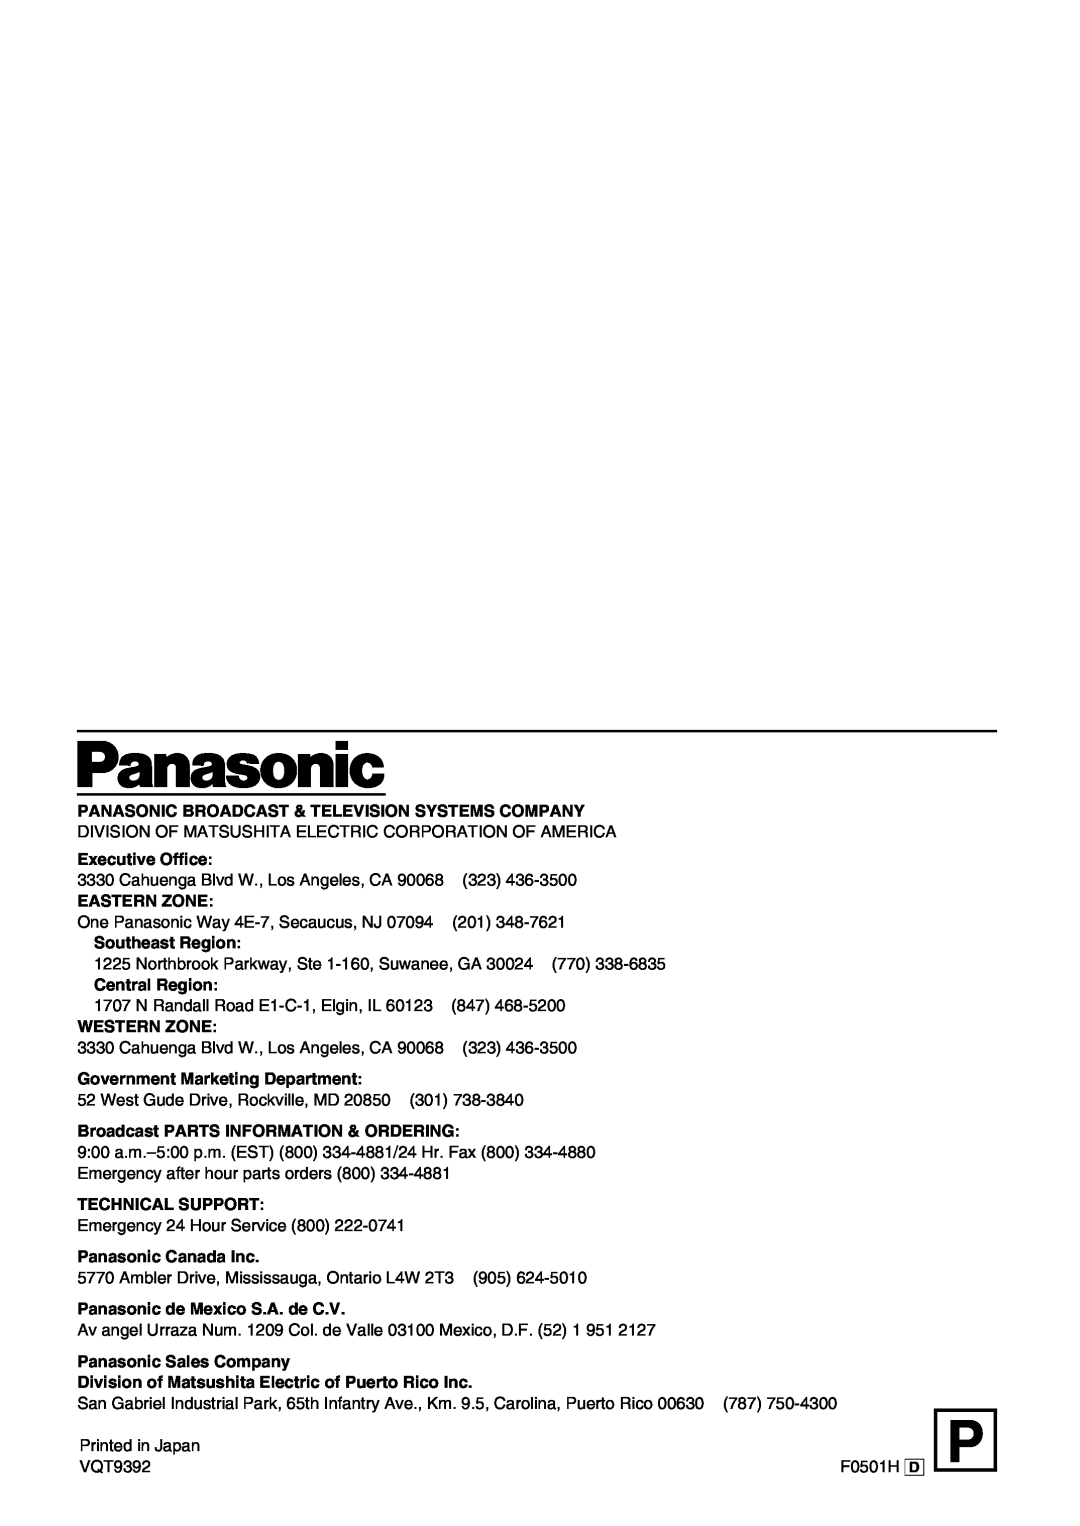 Panasonic AG- DVC 15P Panasonic Broadcast & Television Systems Company, Executive Office, Eastern Zone, Southeast Region 